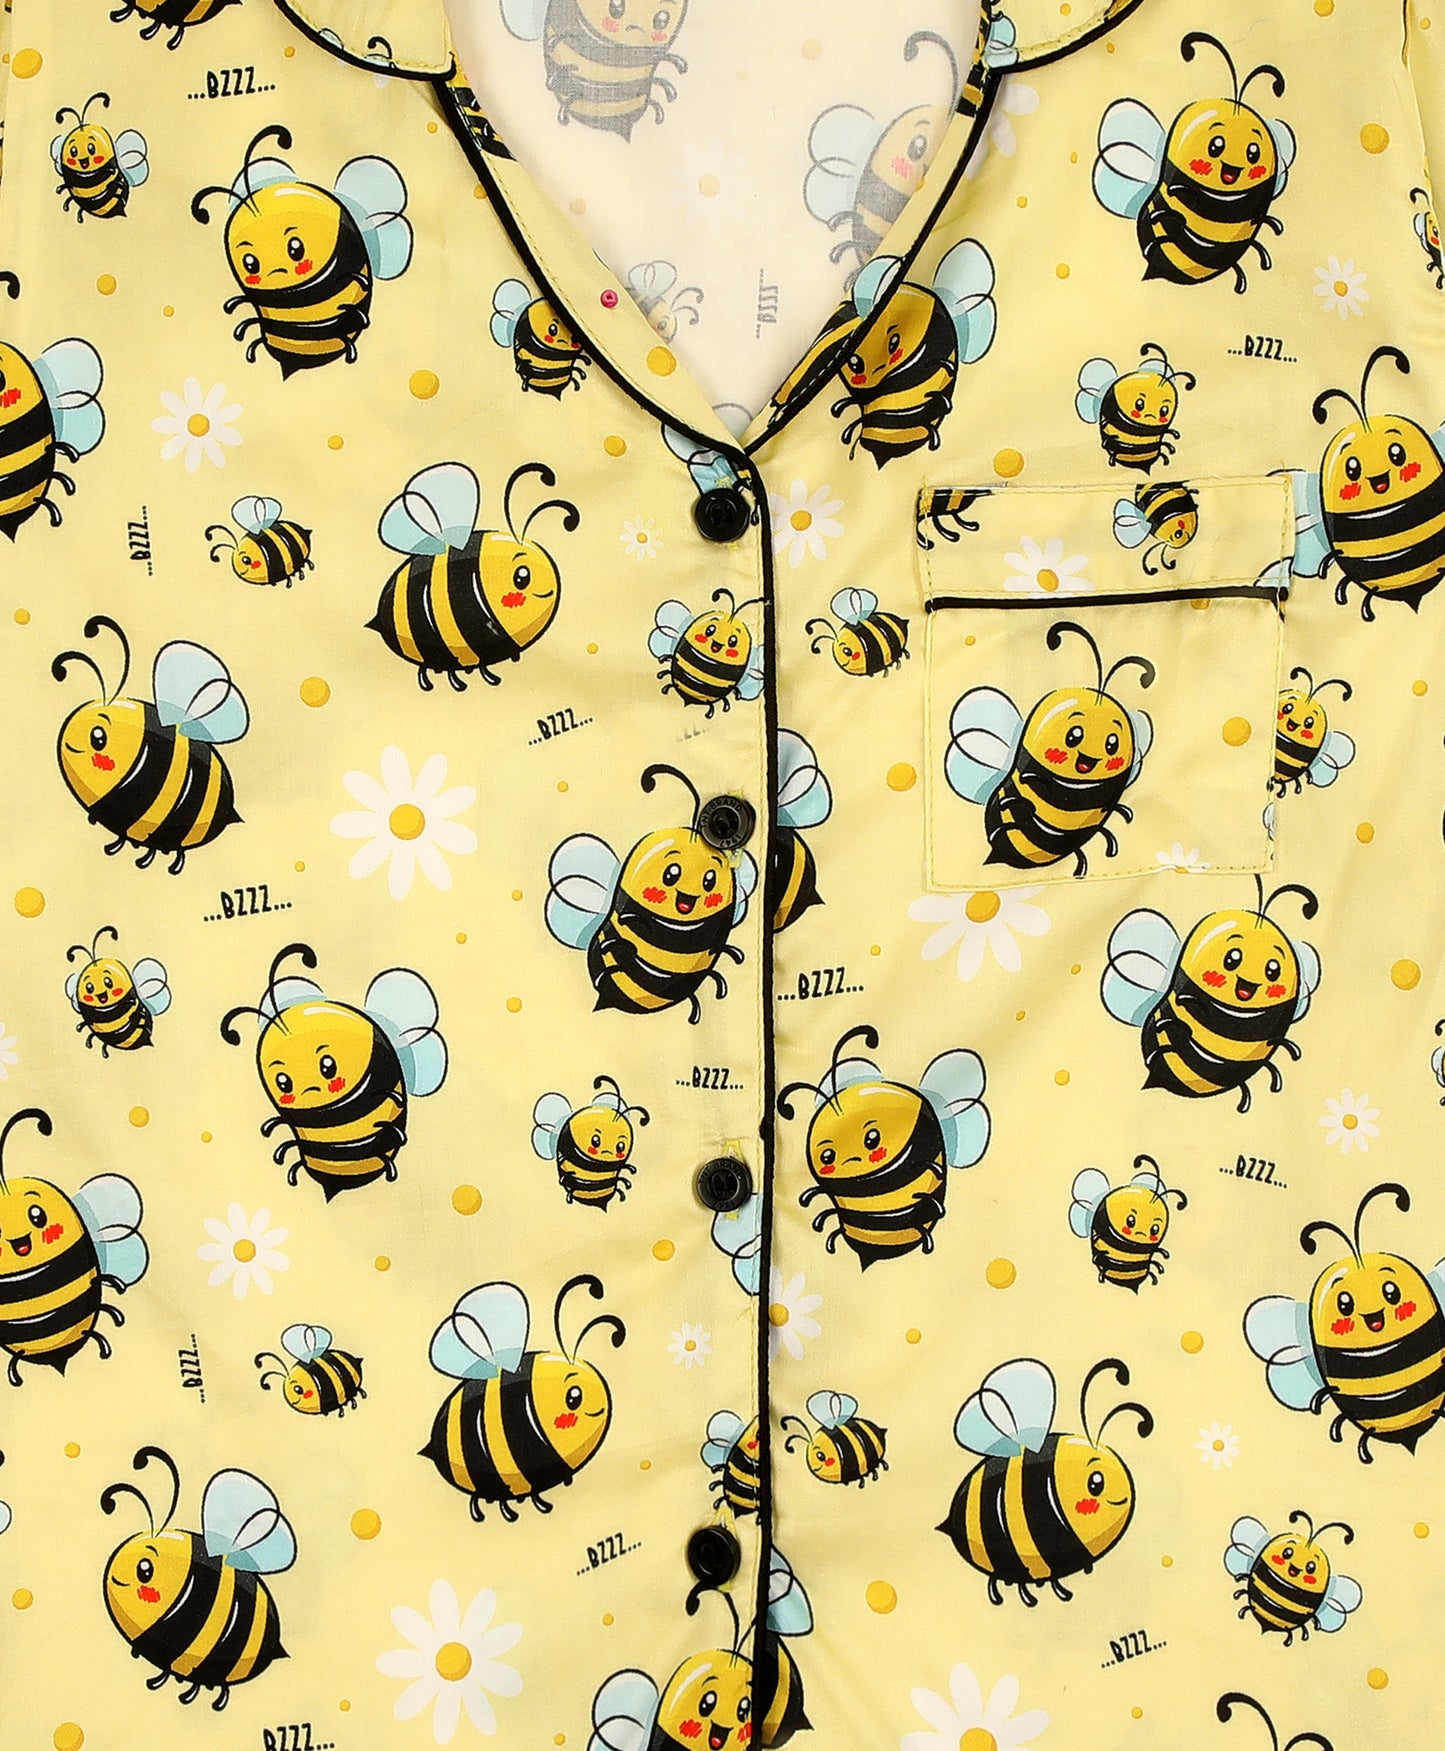 Bumblebee Kids Button Down Pj Set - Pure Cotton Pj Set with Notched Collar